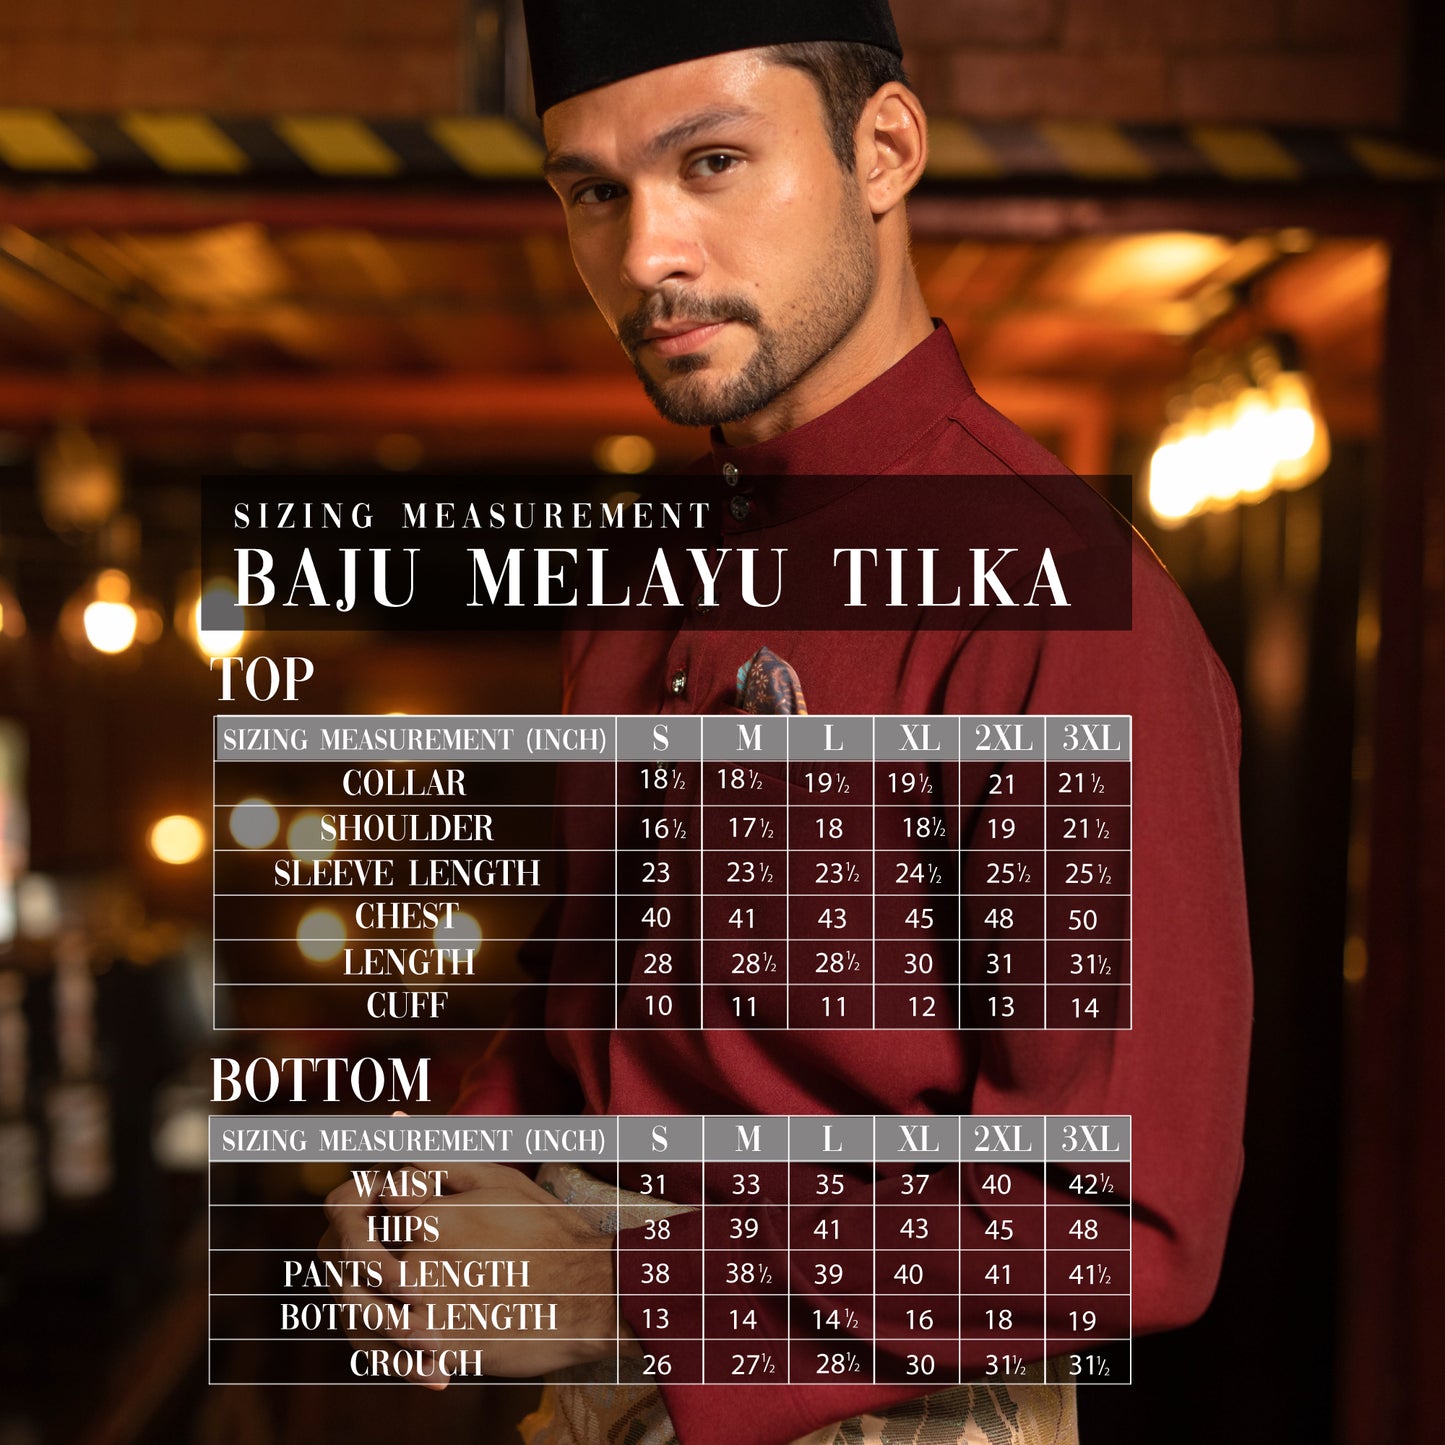 Baju Melayu Tilka - Dark Brown